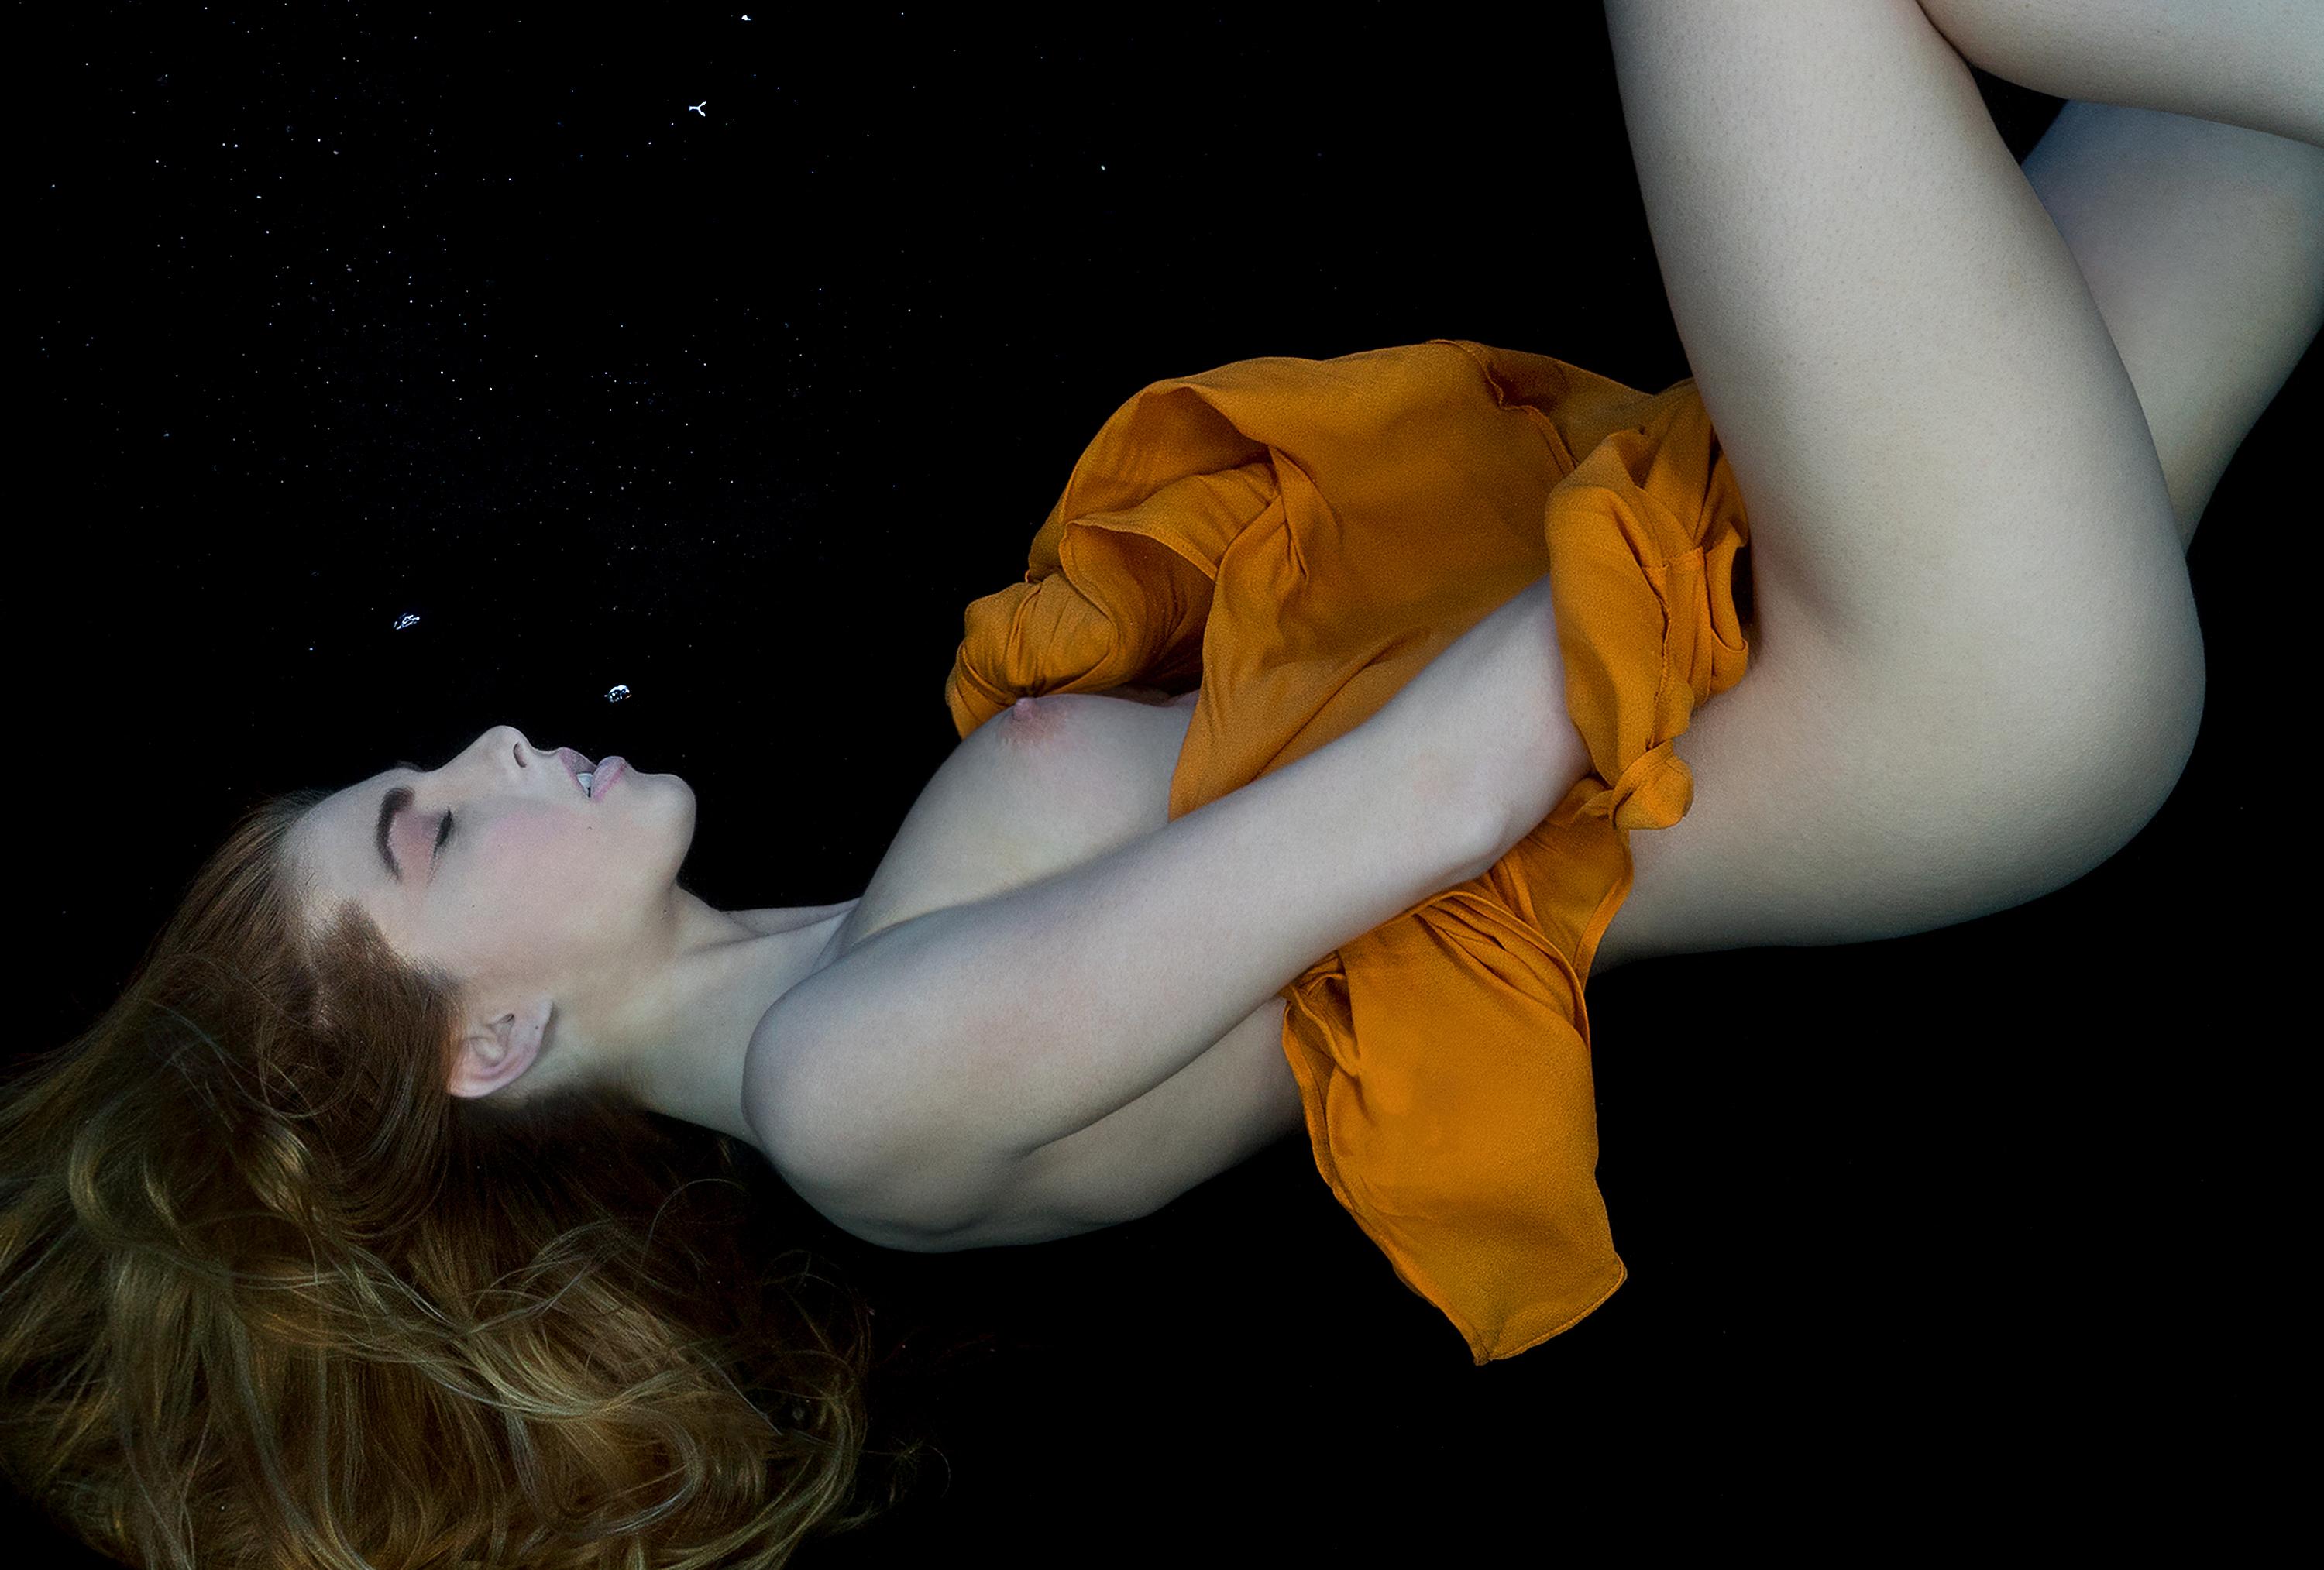 Secret Dreams - underwater nude photograph - archival pigment 16